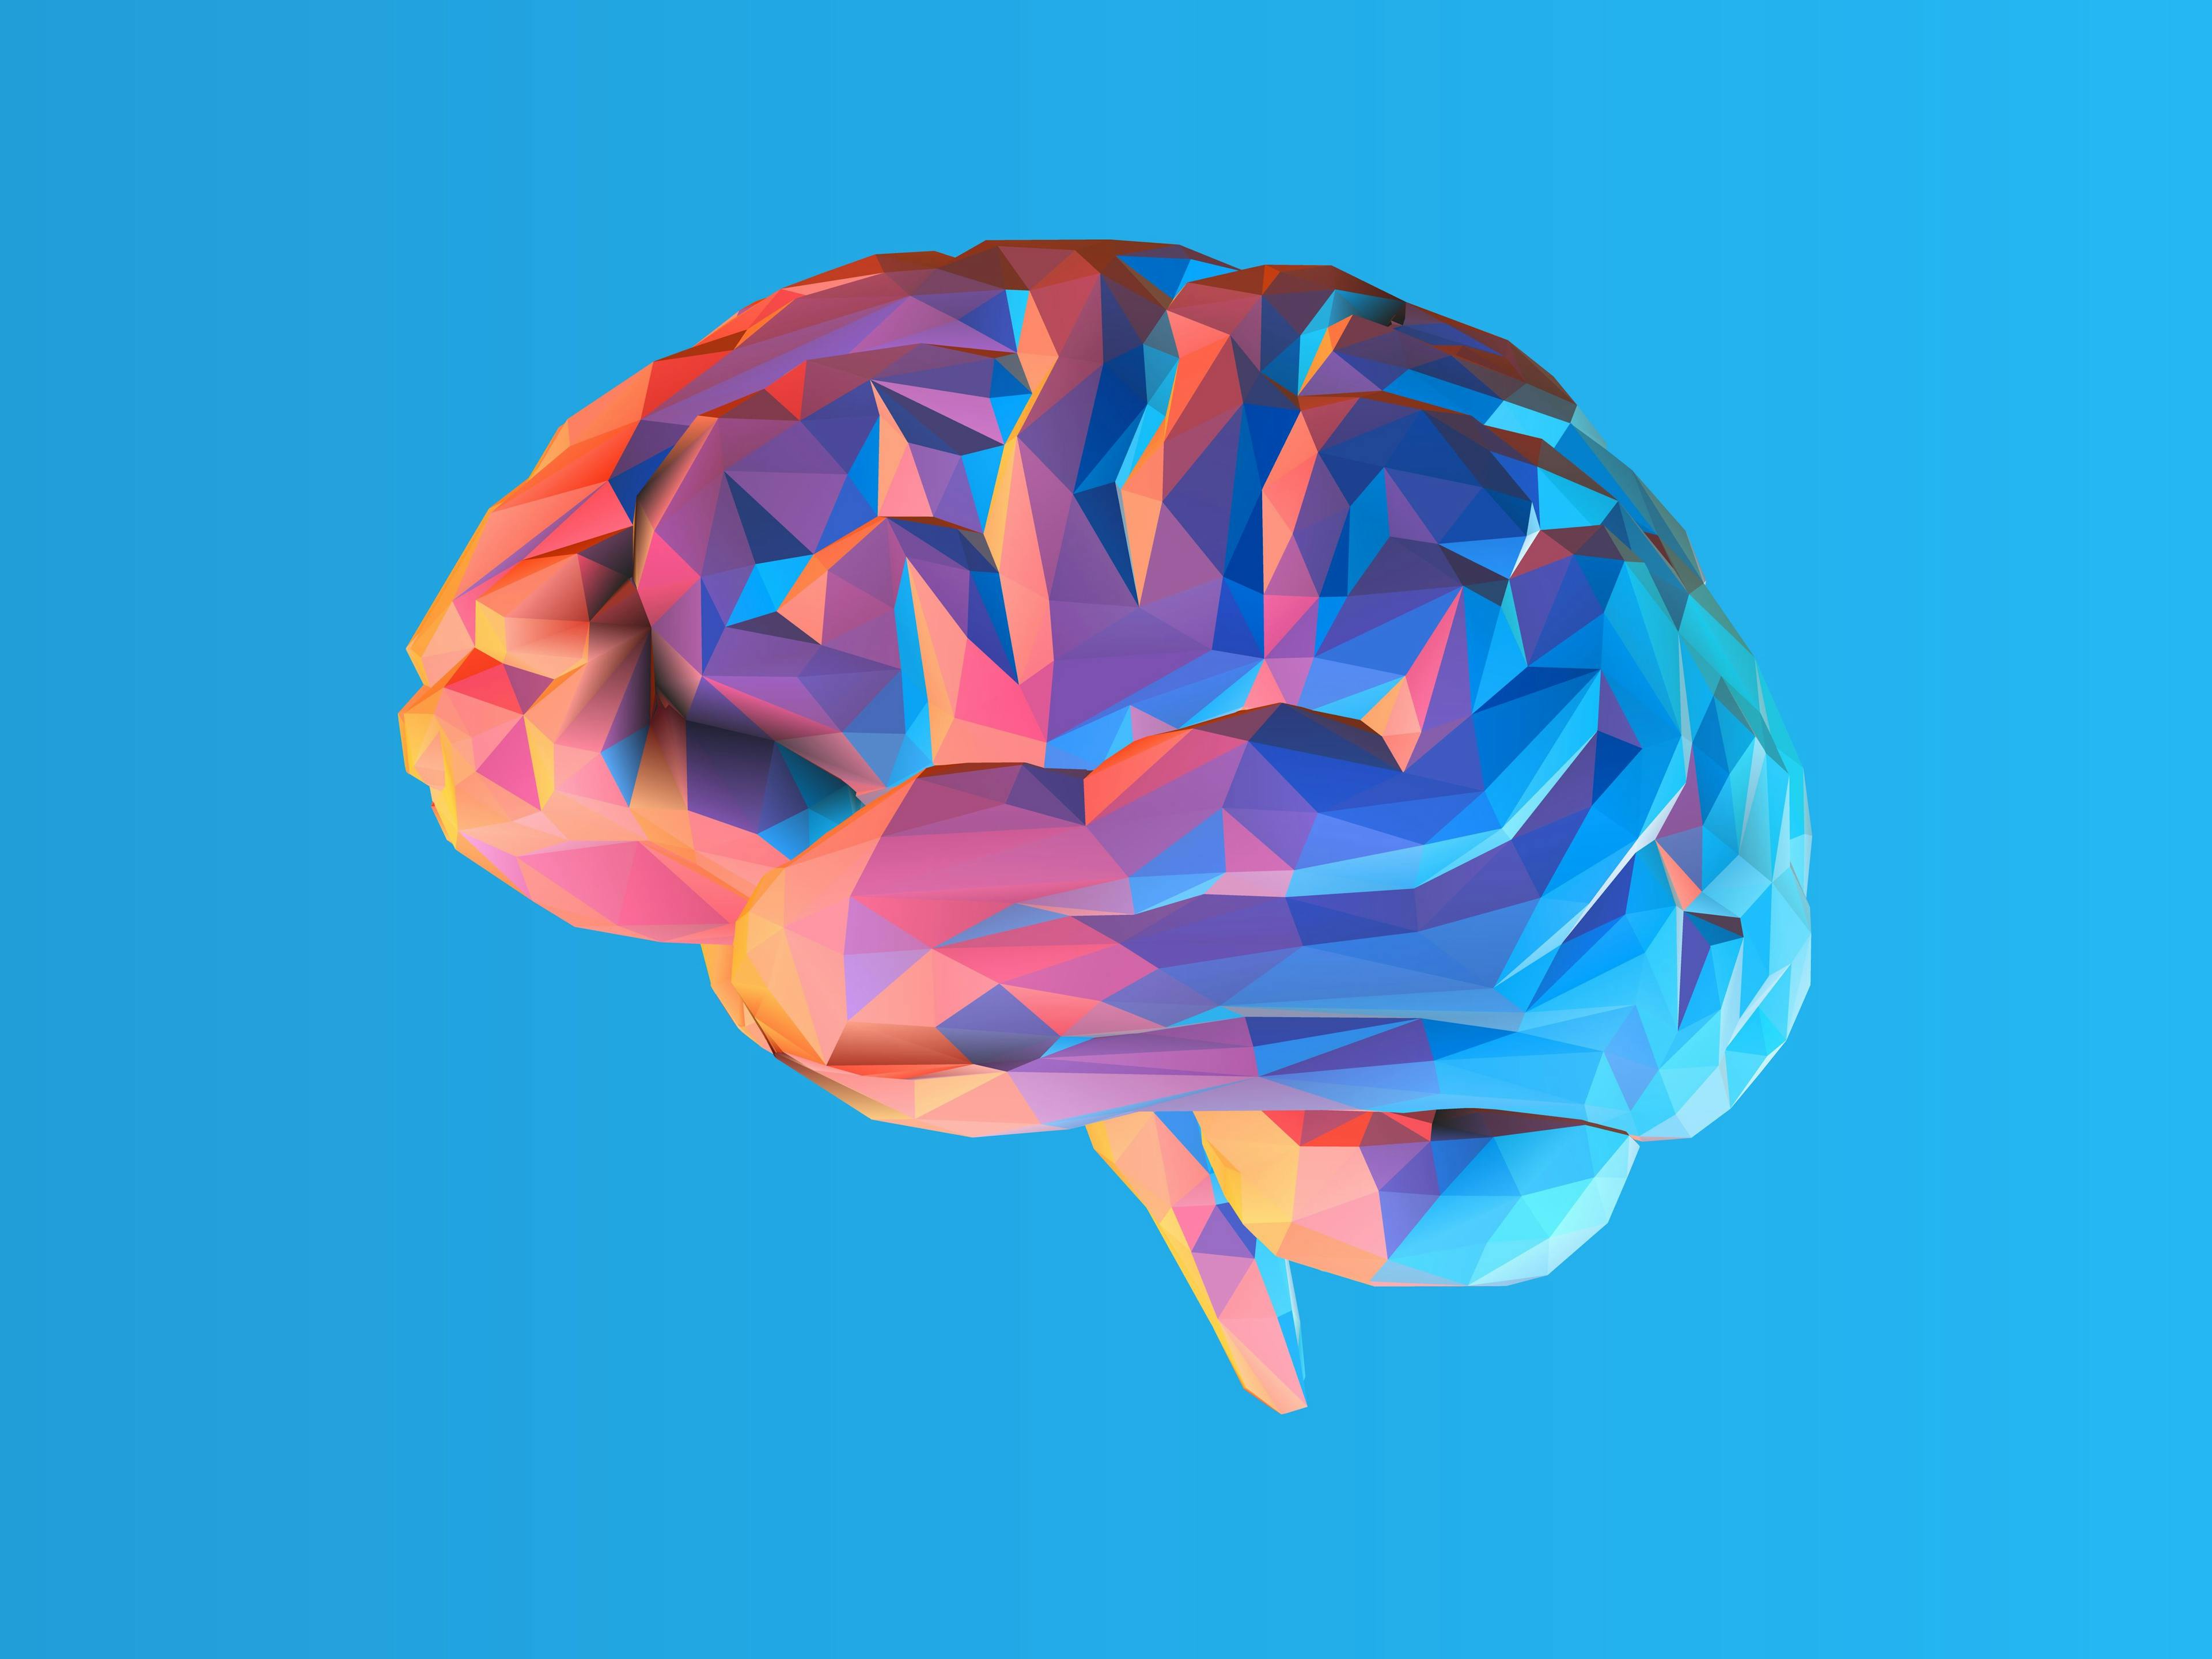 Brain illustration | Image credit: jolygon - stock.adobe.com